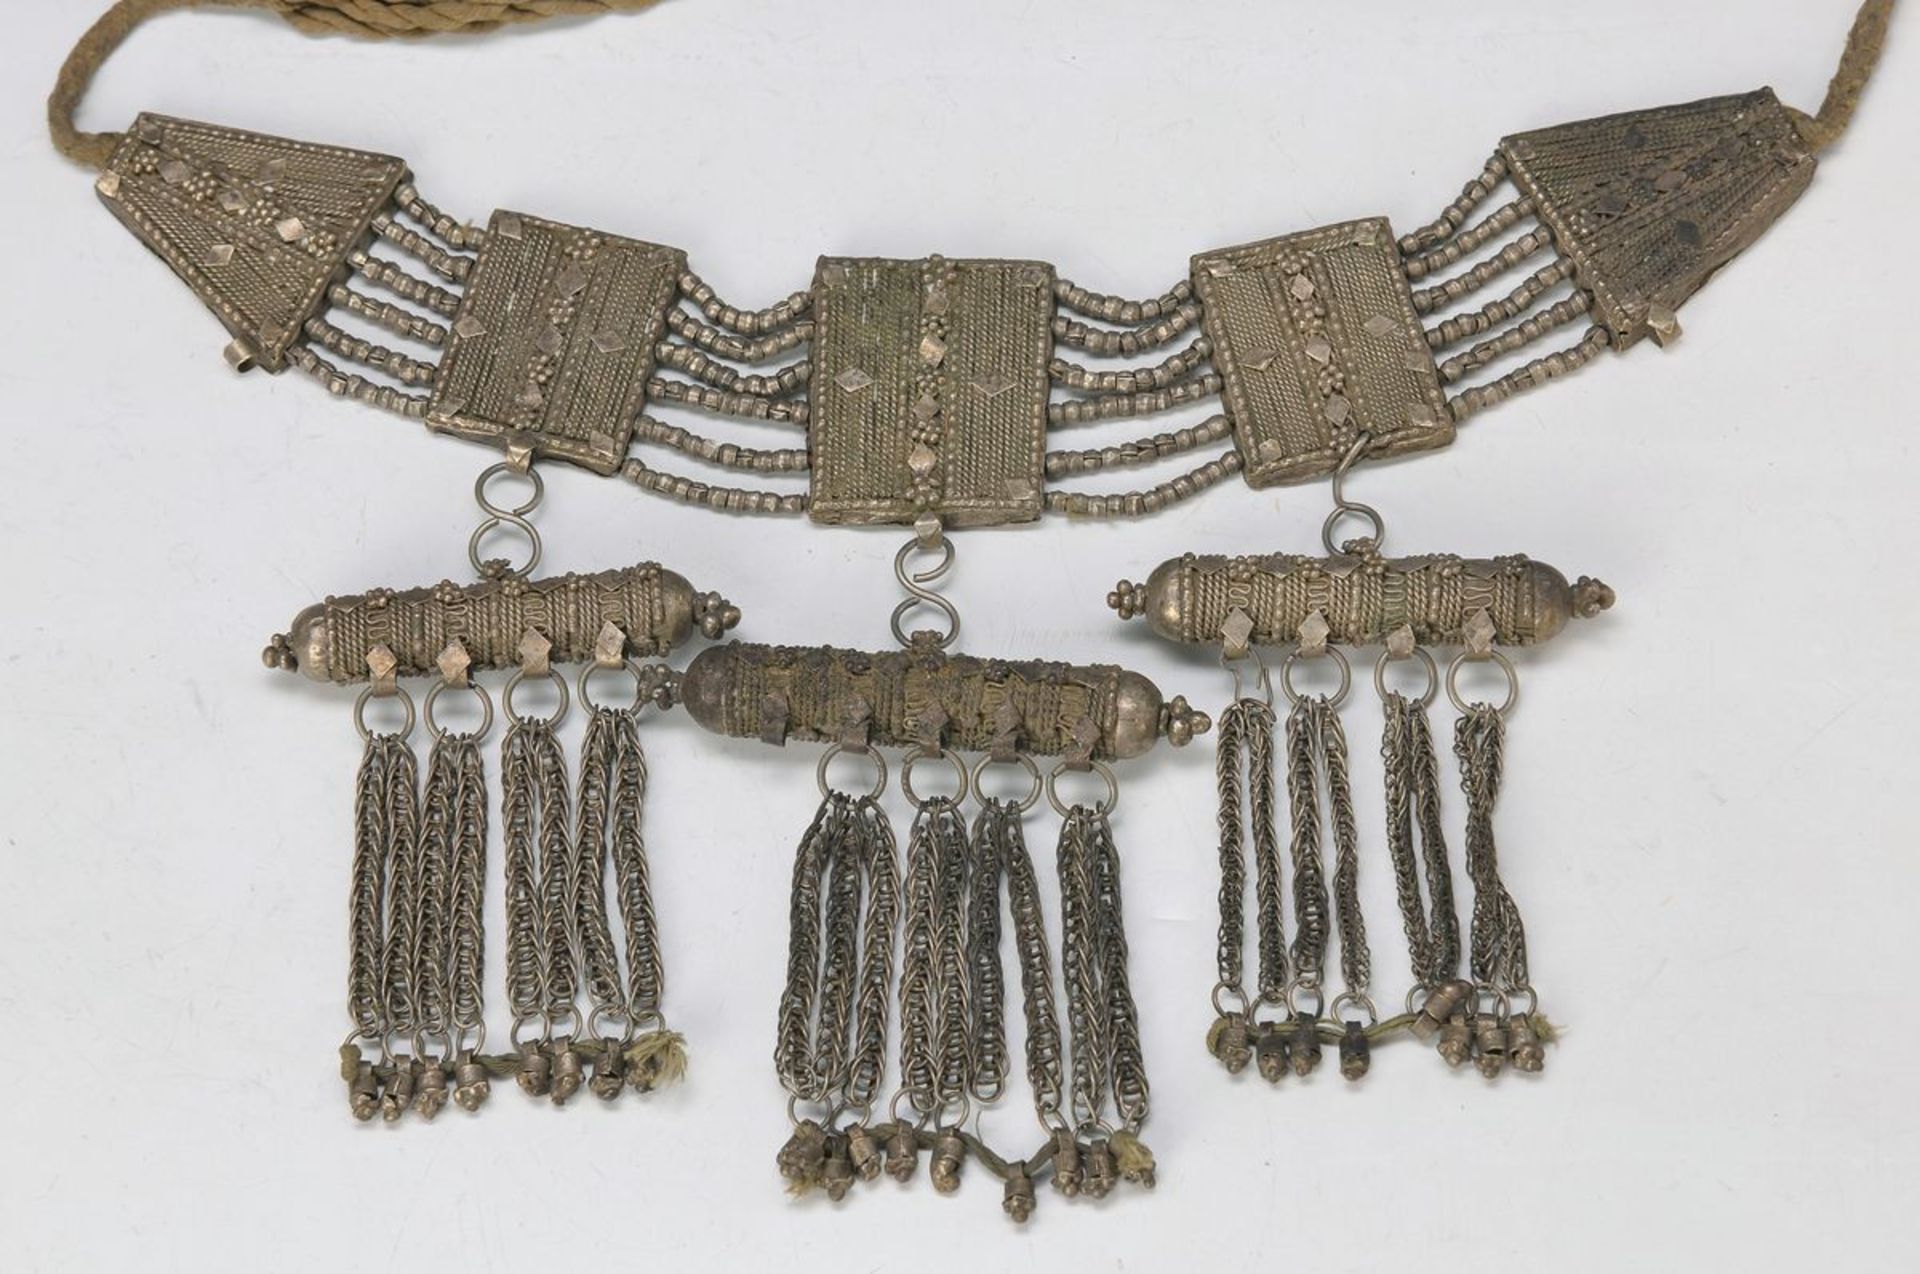 Kopfschmuck, Turkmenistan, um 1900, Silbersud, Filigran- und Granulatarbeit, L ca. 35cmheaddress,